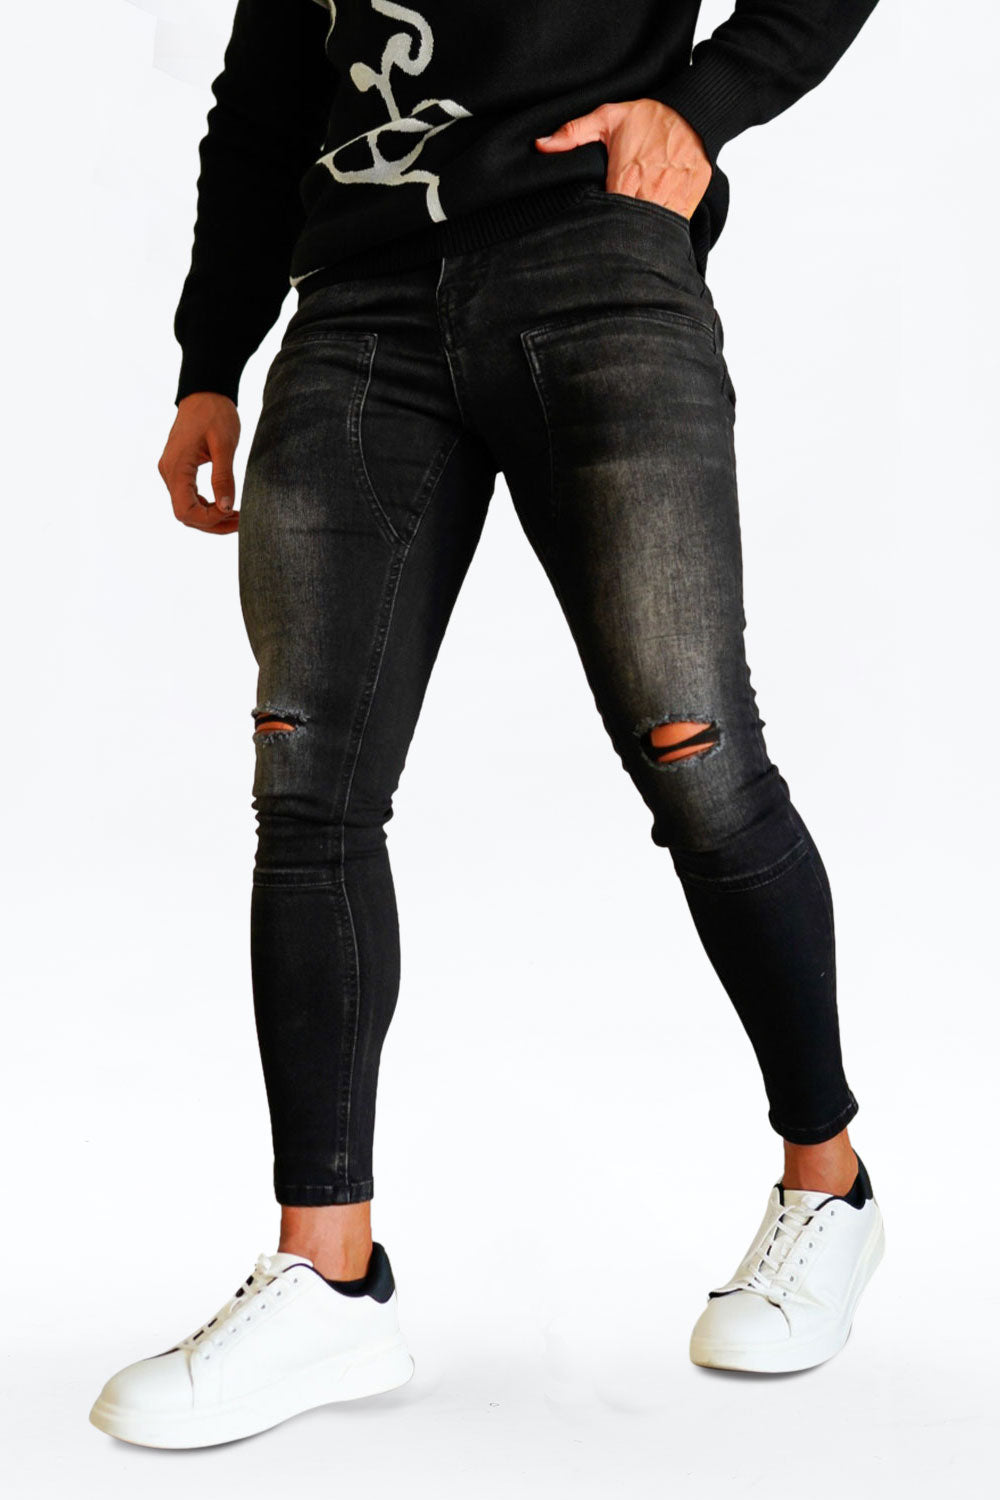 black ripped stretch jeans